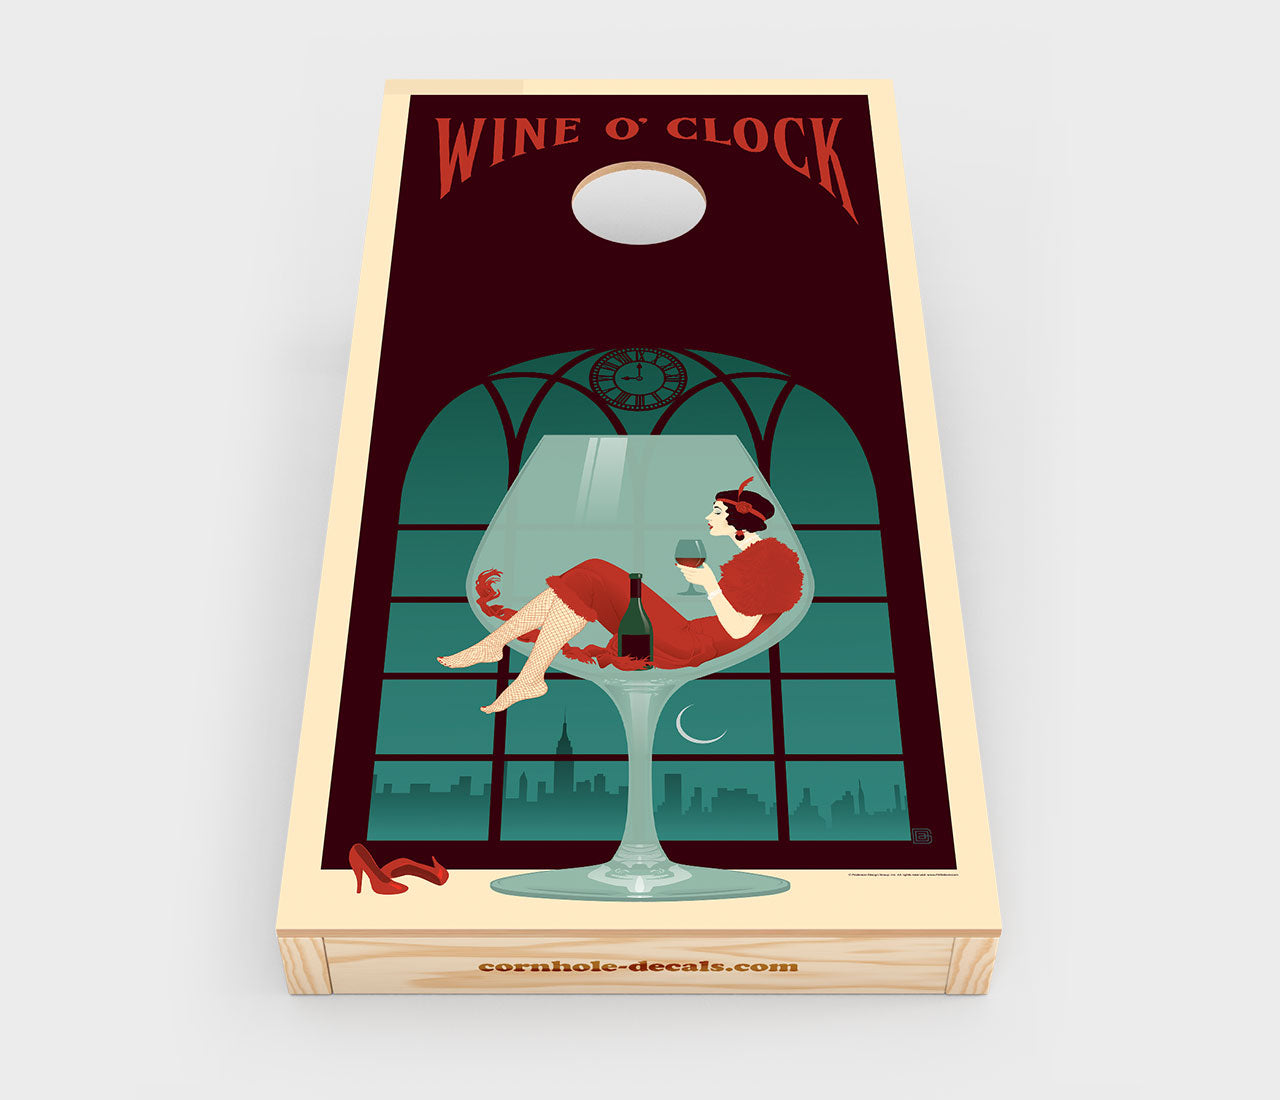 Chuggles Cornhole - Anderson Design Group - Wine O' Clock Cornhole Decals - Straight On View